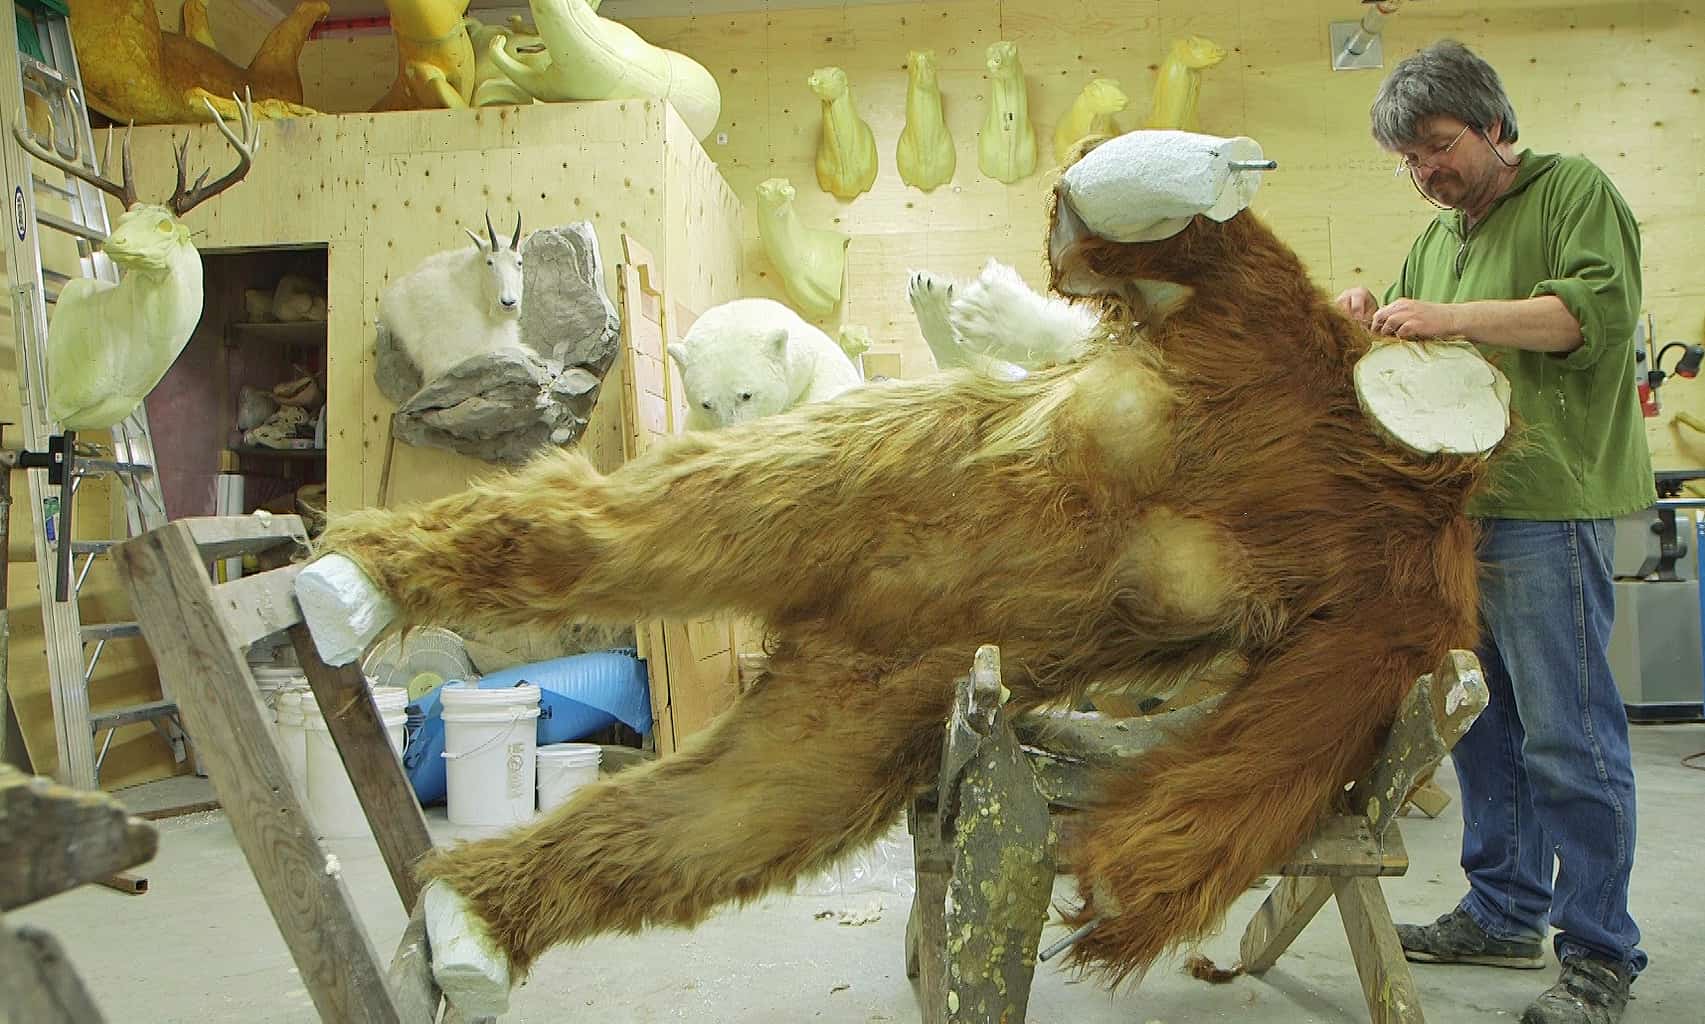 Ken Walker sews up Patty's hide in the movie Big Fur. Image courtesy of Big Fur director Dan Wayne.